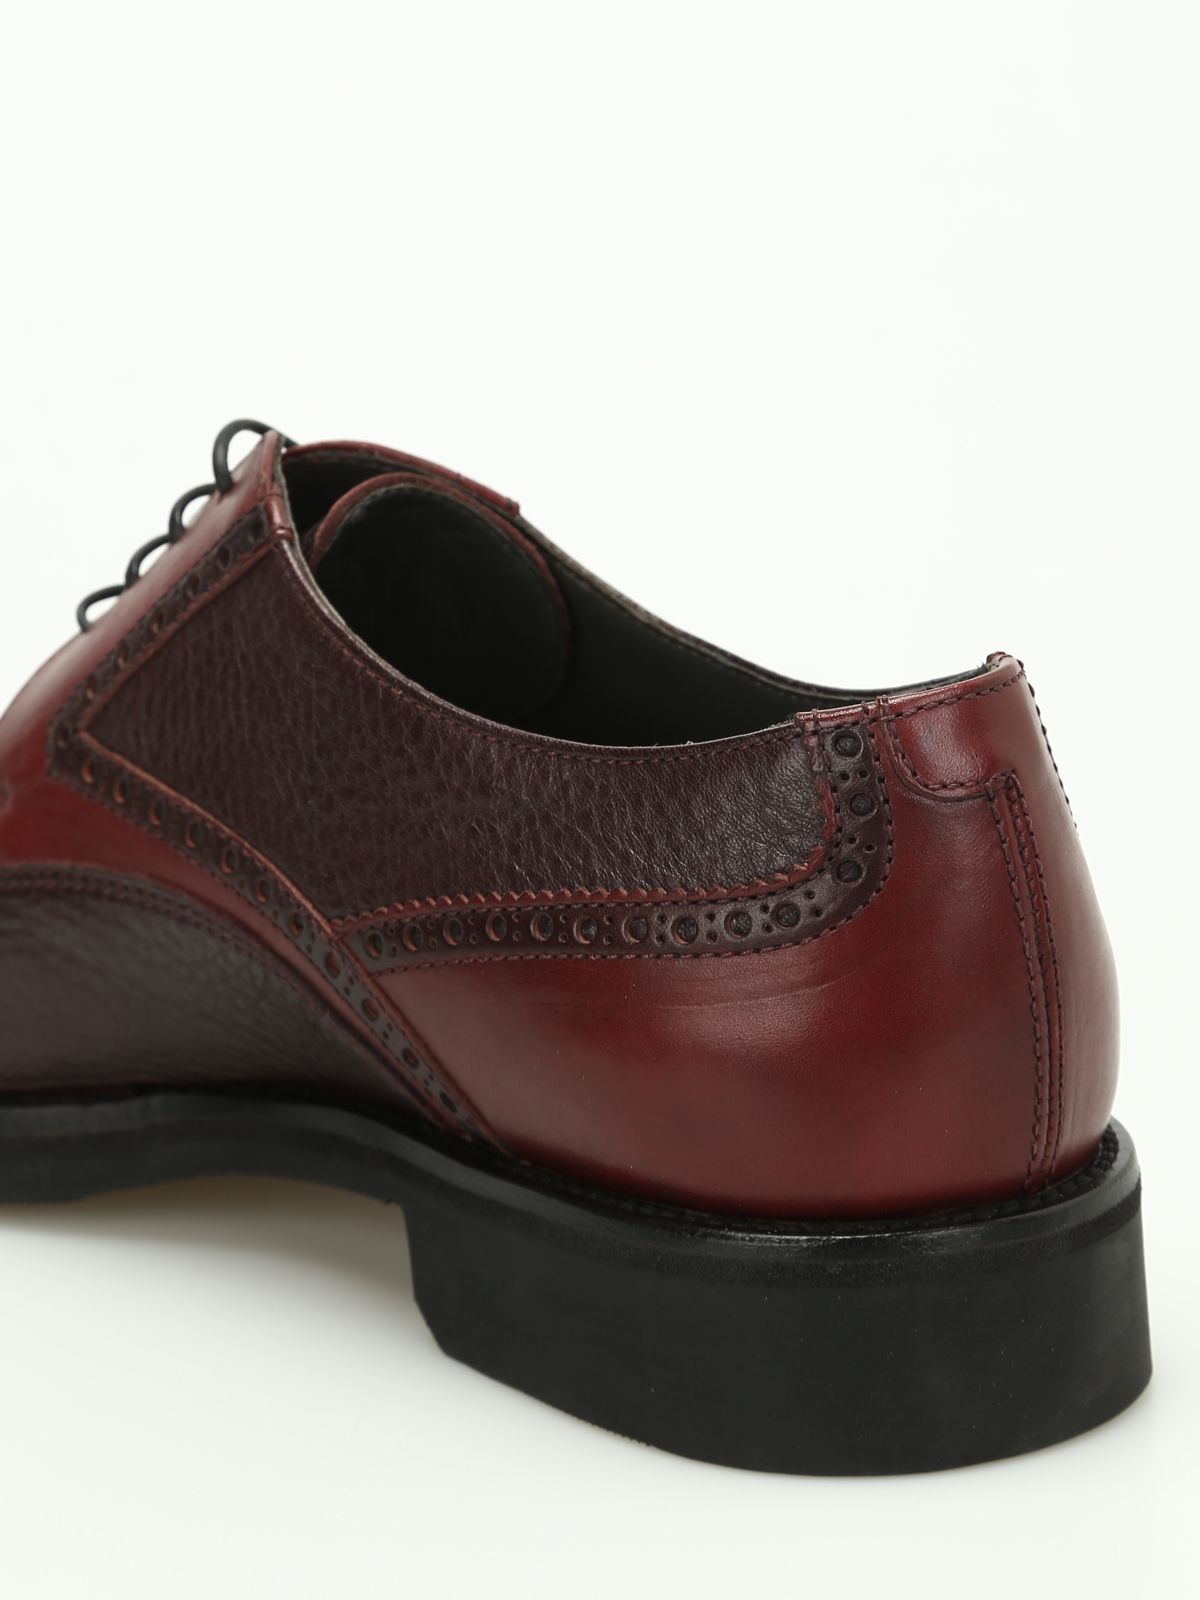 moreschi shoes online